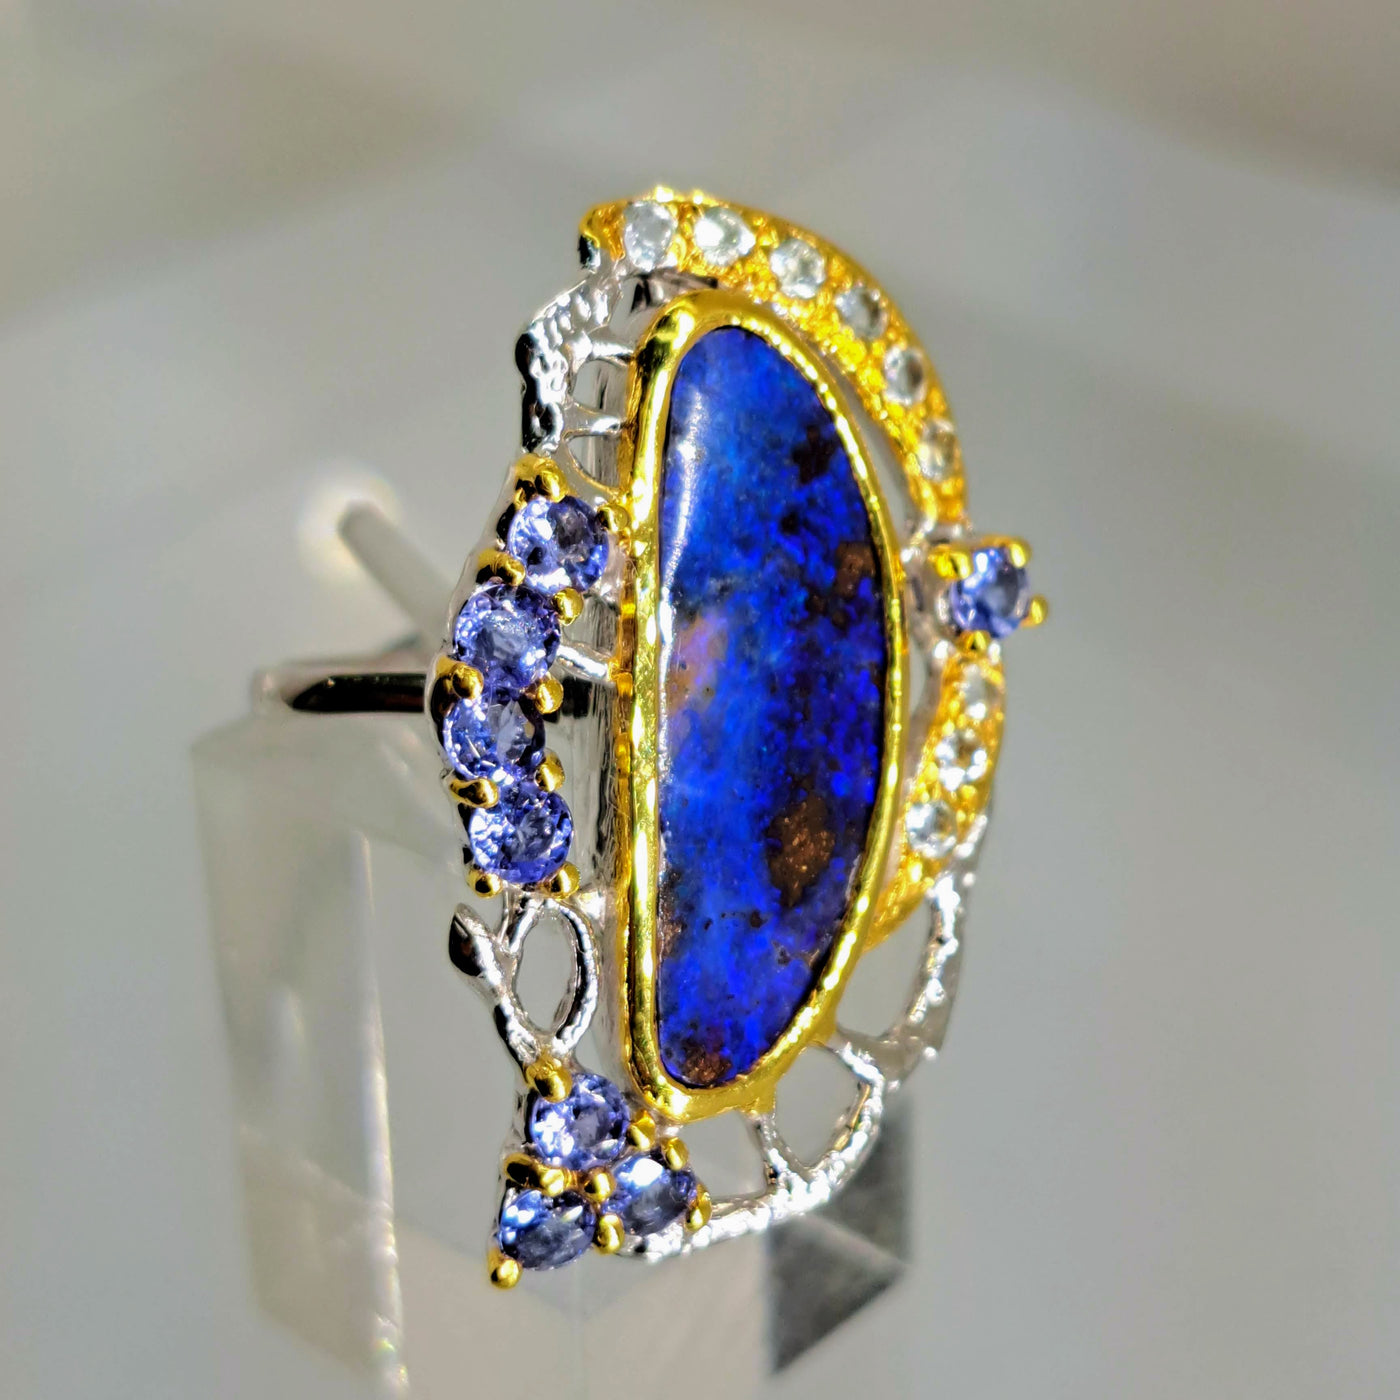 "Blue Heaven" Sz 8 Ring - Tanzanite, Boulder Opal, Blue Topaz. .925 Sterling silver and 18k gold